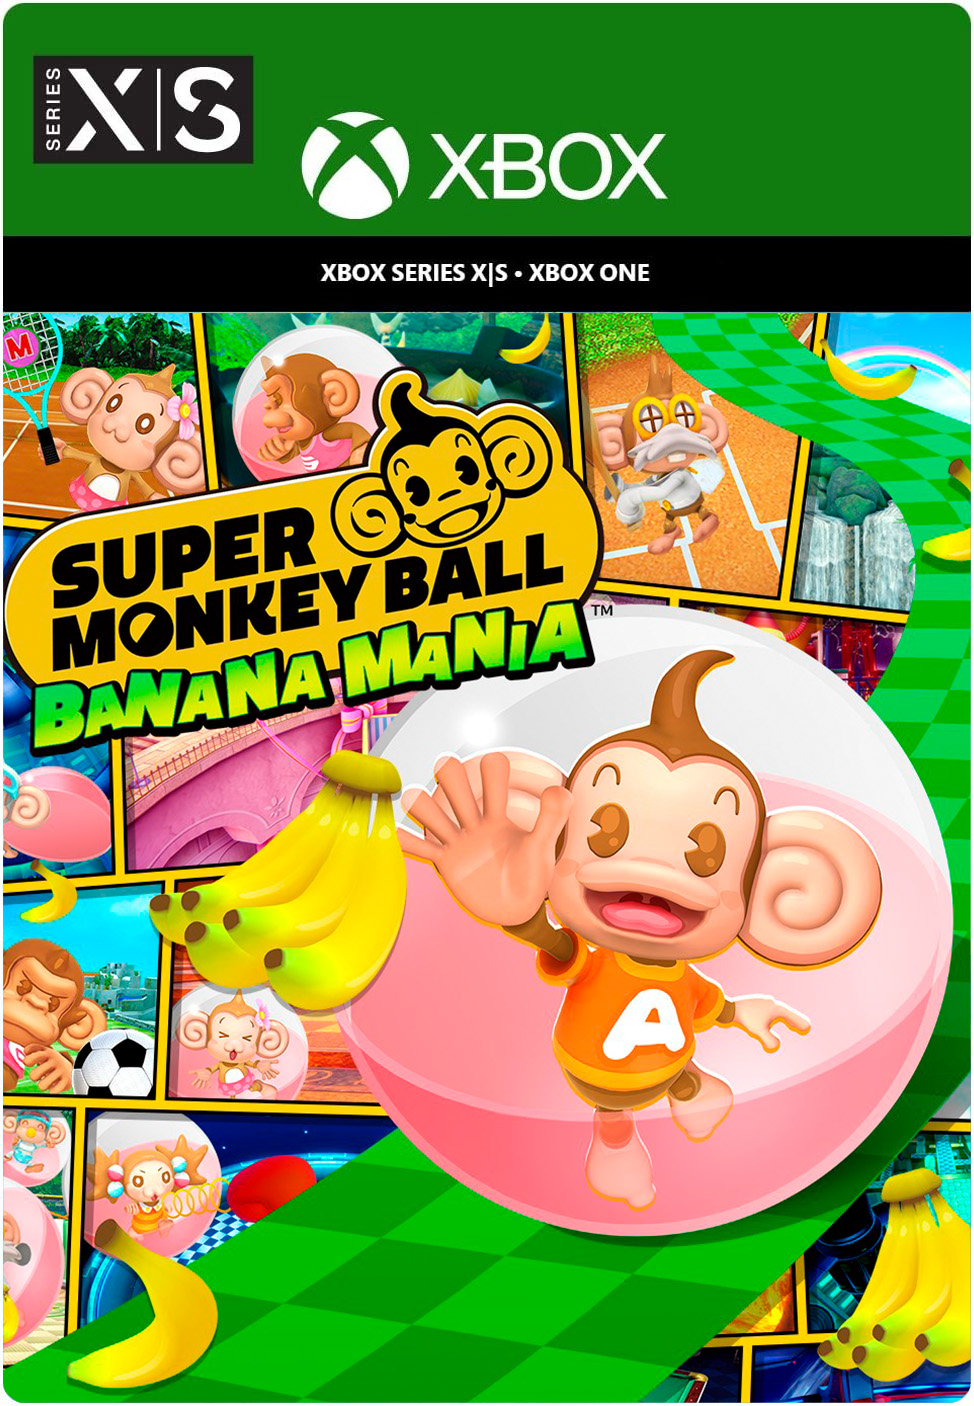 Super monkey ball banana. Super Monkey Ball Banana Mania. Super Monkey Ball Banana Mania обложка. Super Monkeys игра. Super Monkey Ball ps1.